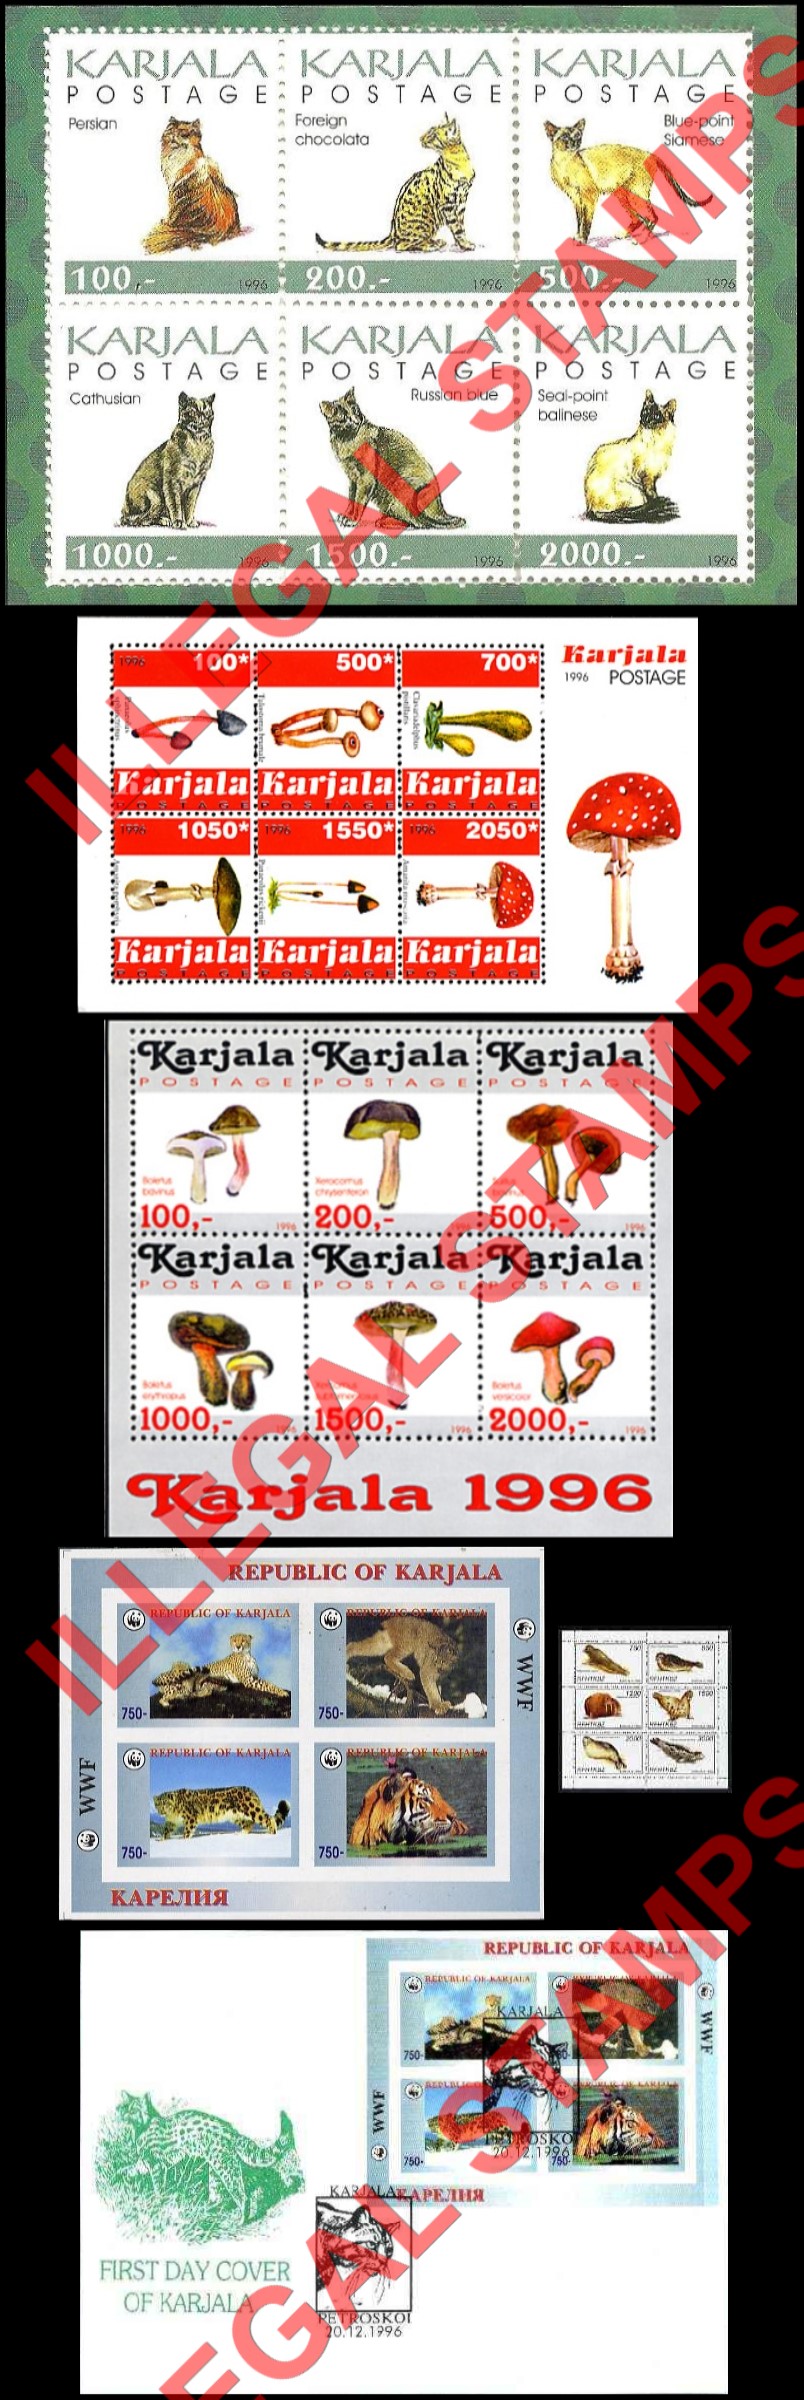 Karjala 1996 Illegal Stamps